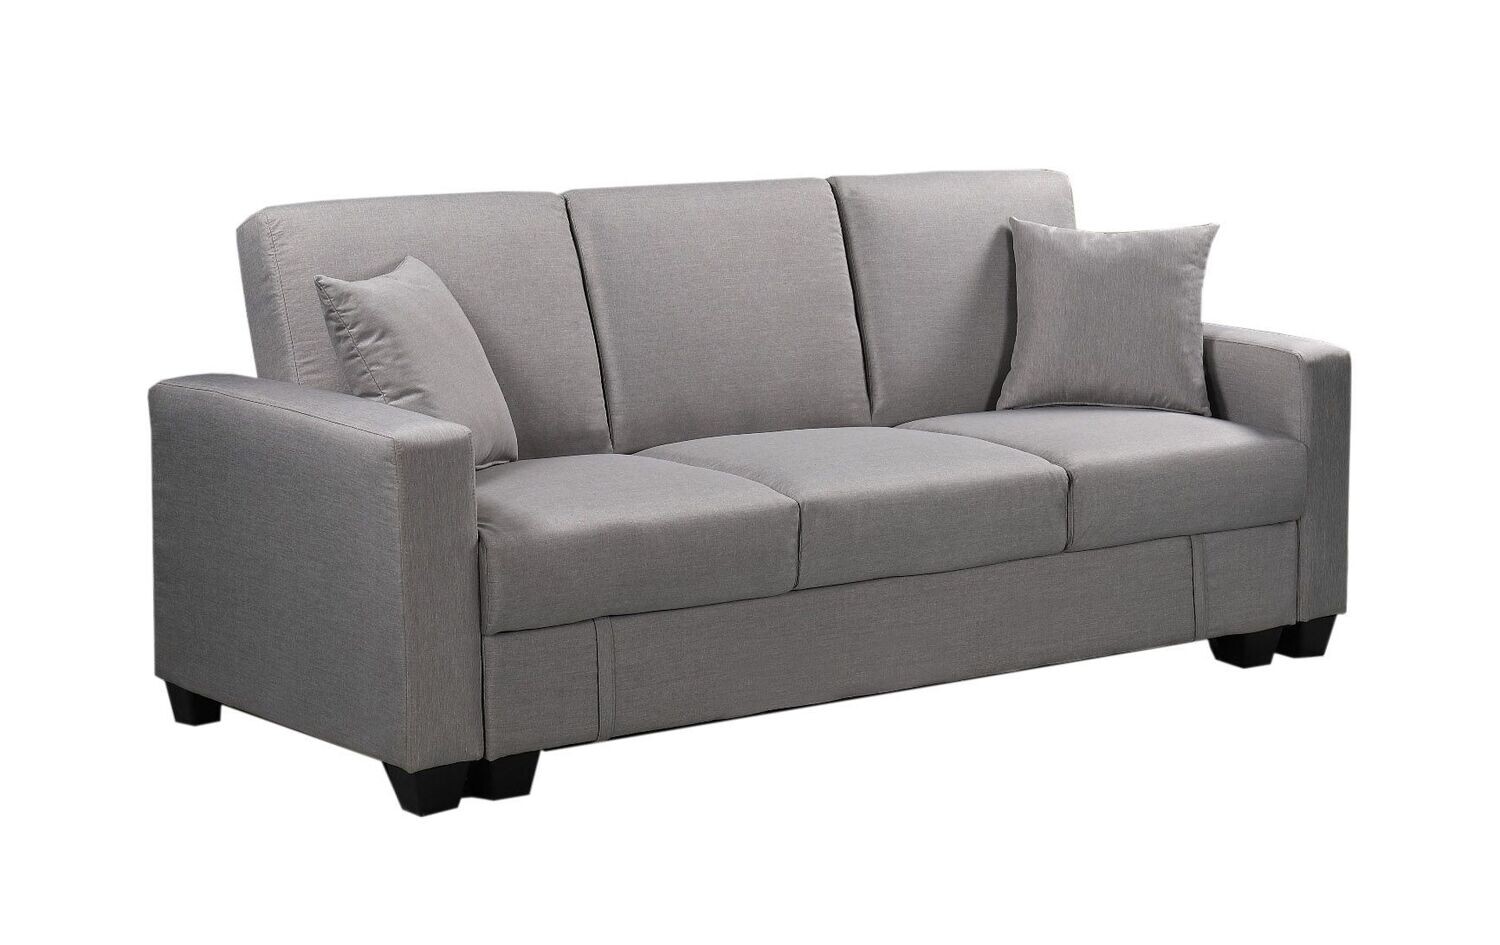 Sofa Cama Barato Keyla 210x85cm, con Arcon